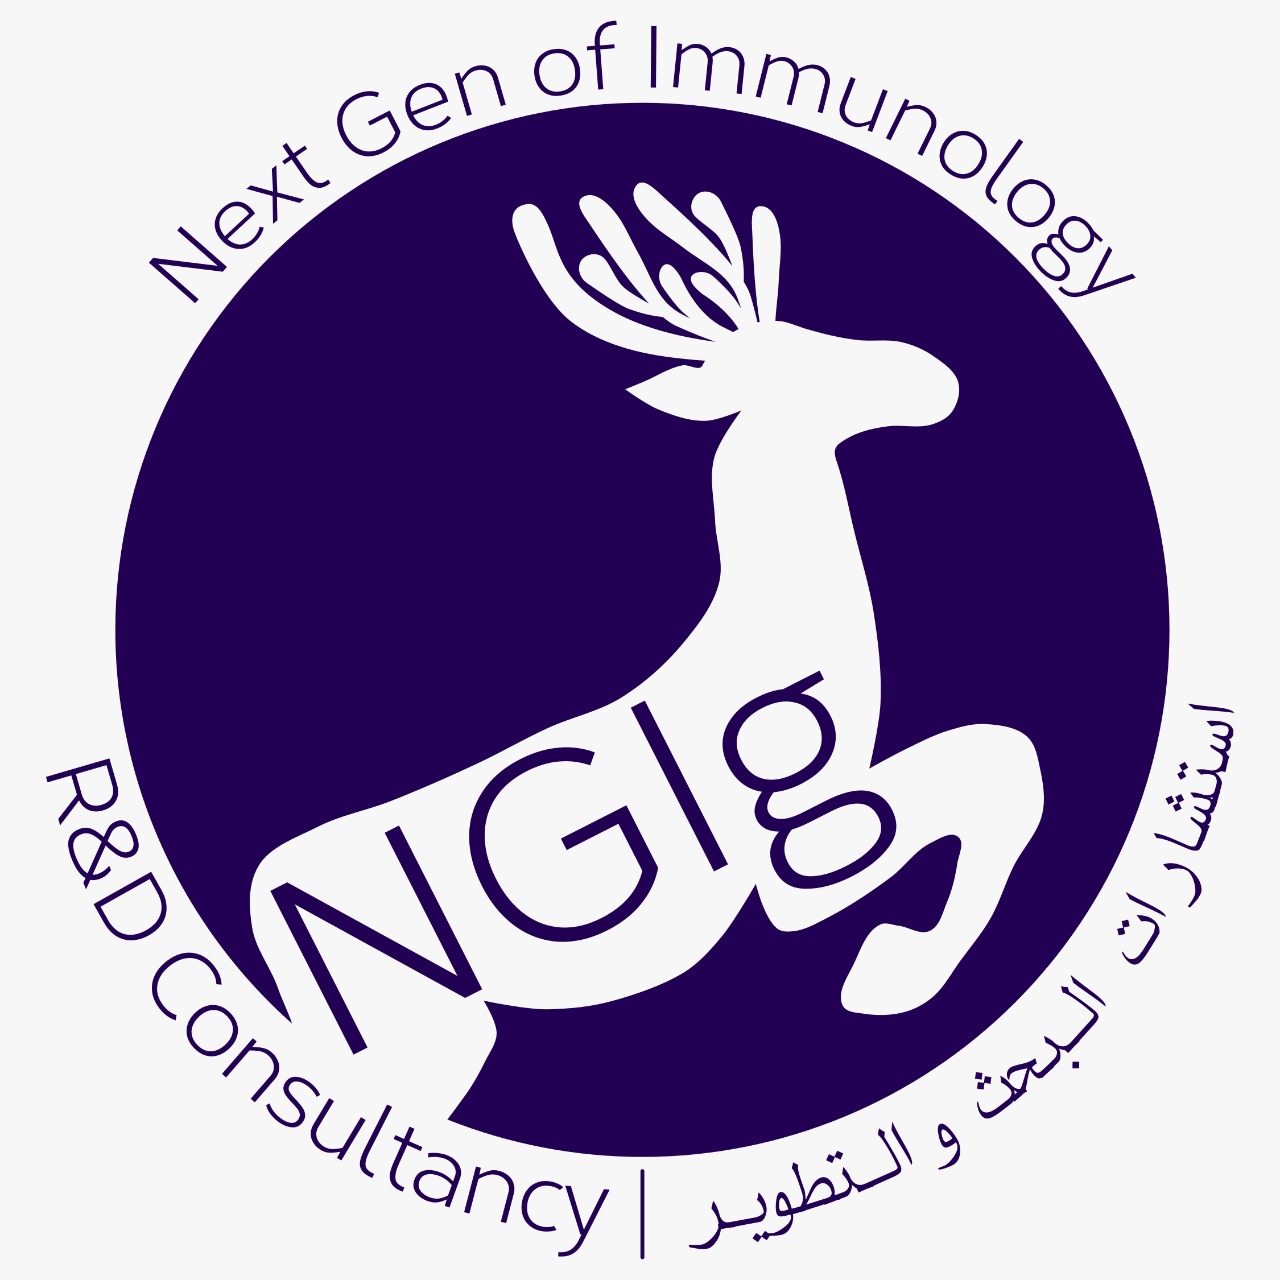 NextGen of Immunology (NGIg1 DMCC) consultancy